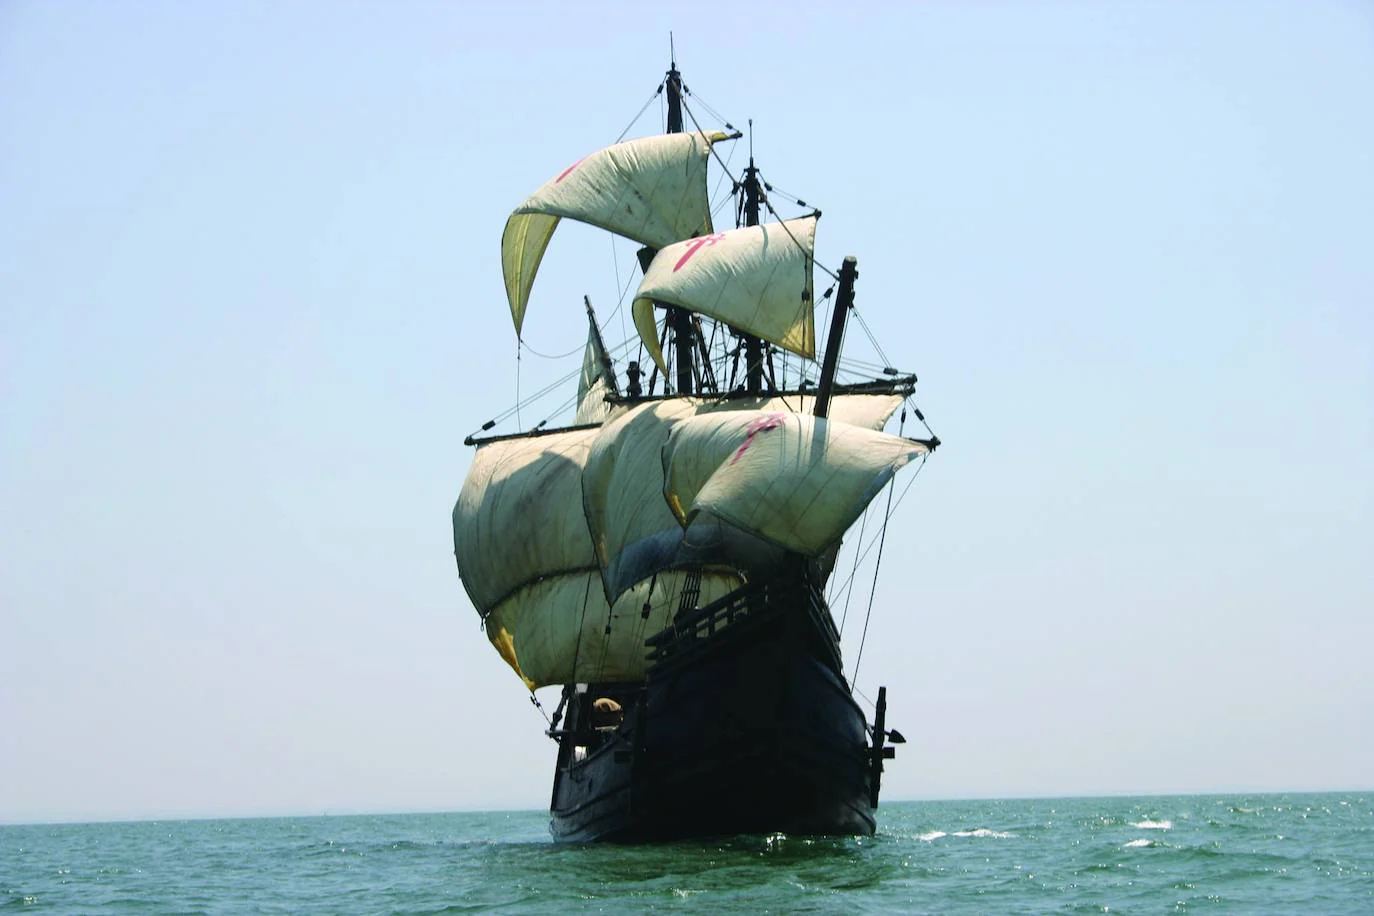 The replica of the sailing ship, Nao Victoria. /SUR